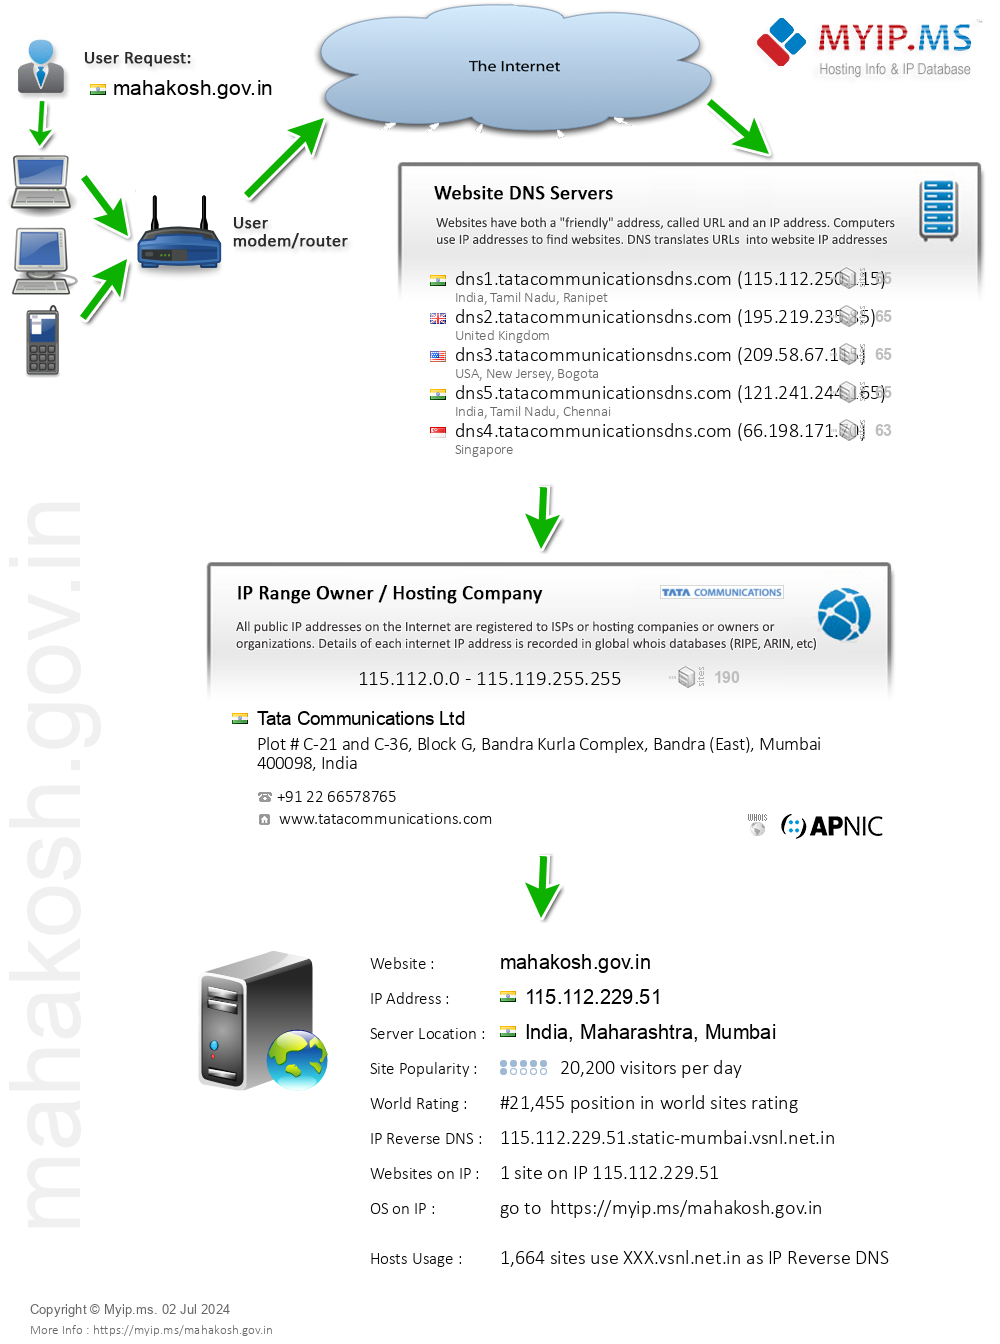 Mahakosh.gov.in - Website Hosting Visual IP Diagram